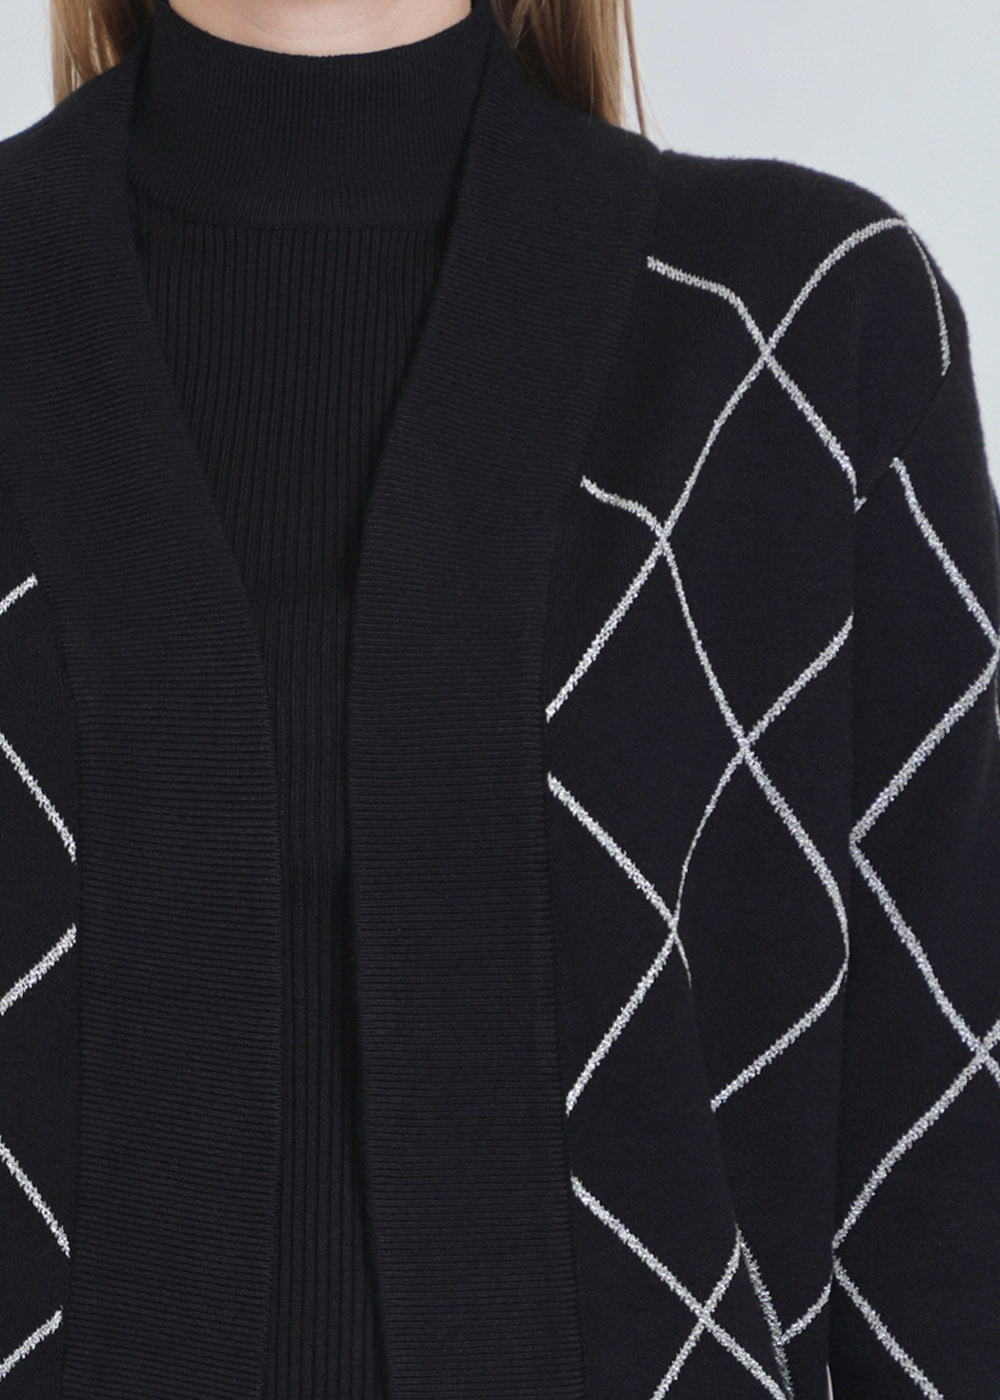 Black Knit Cardigan: Subtle White Geometric Accents